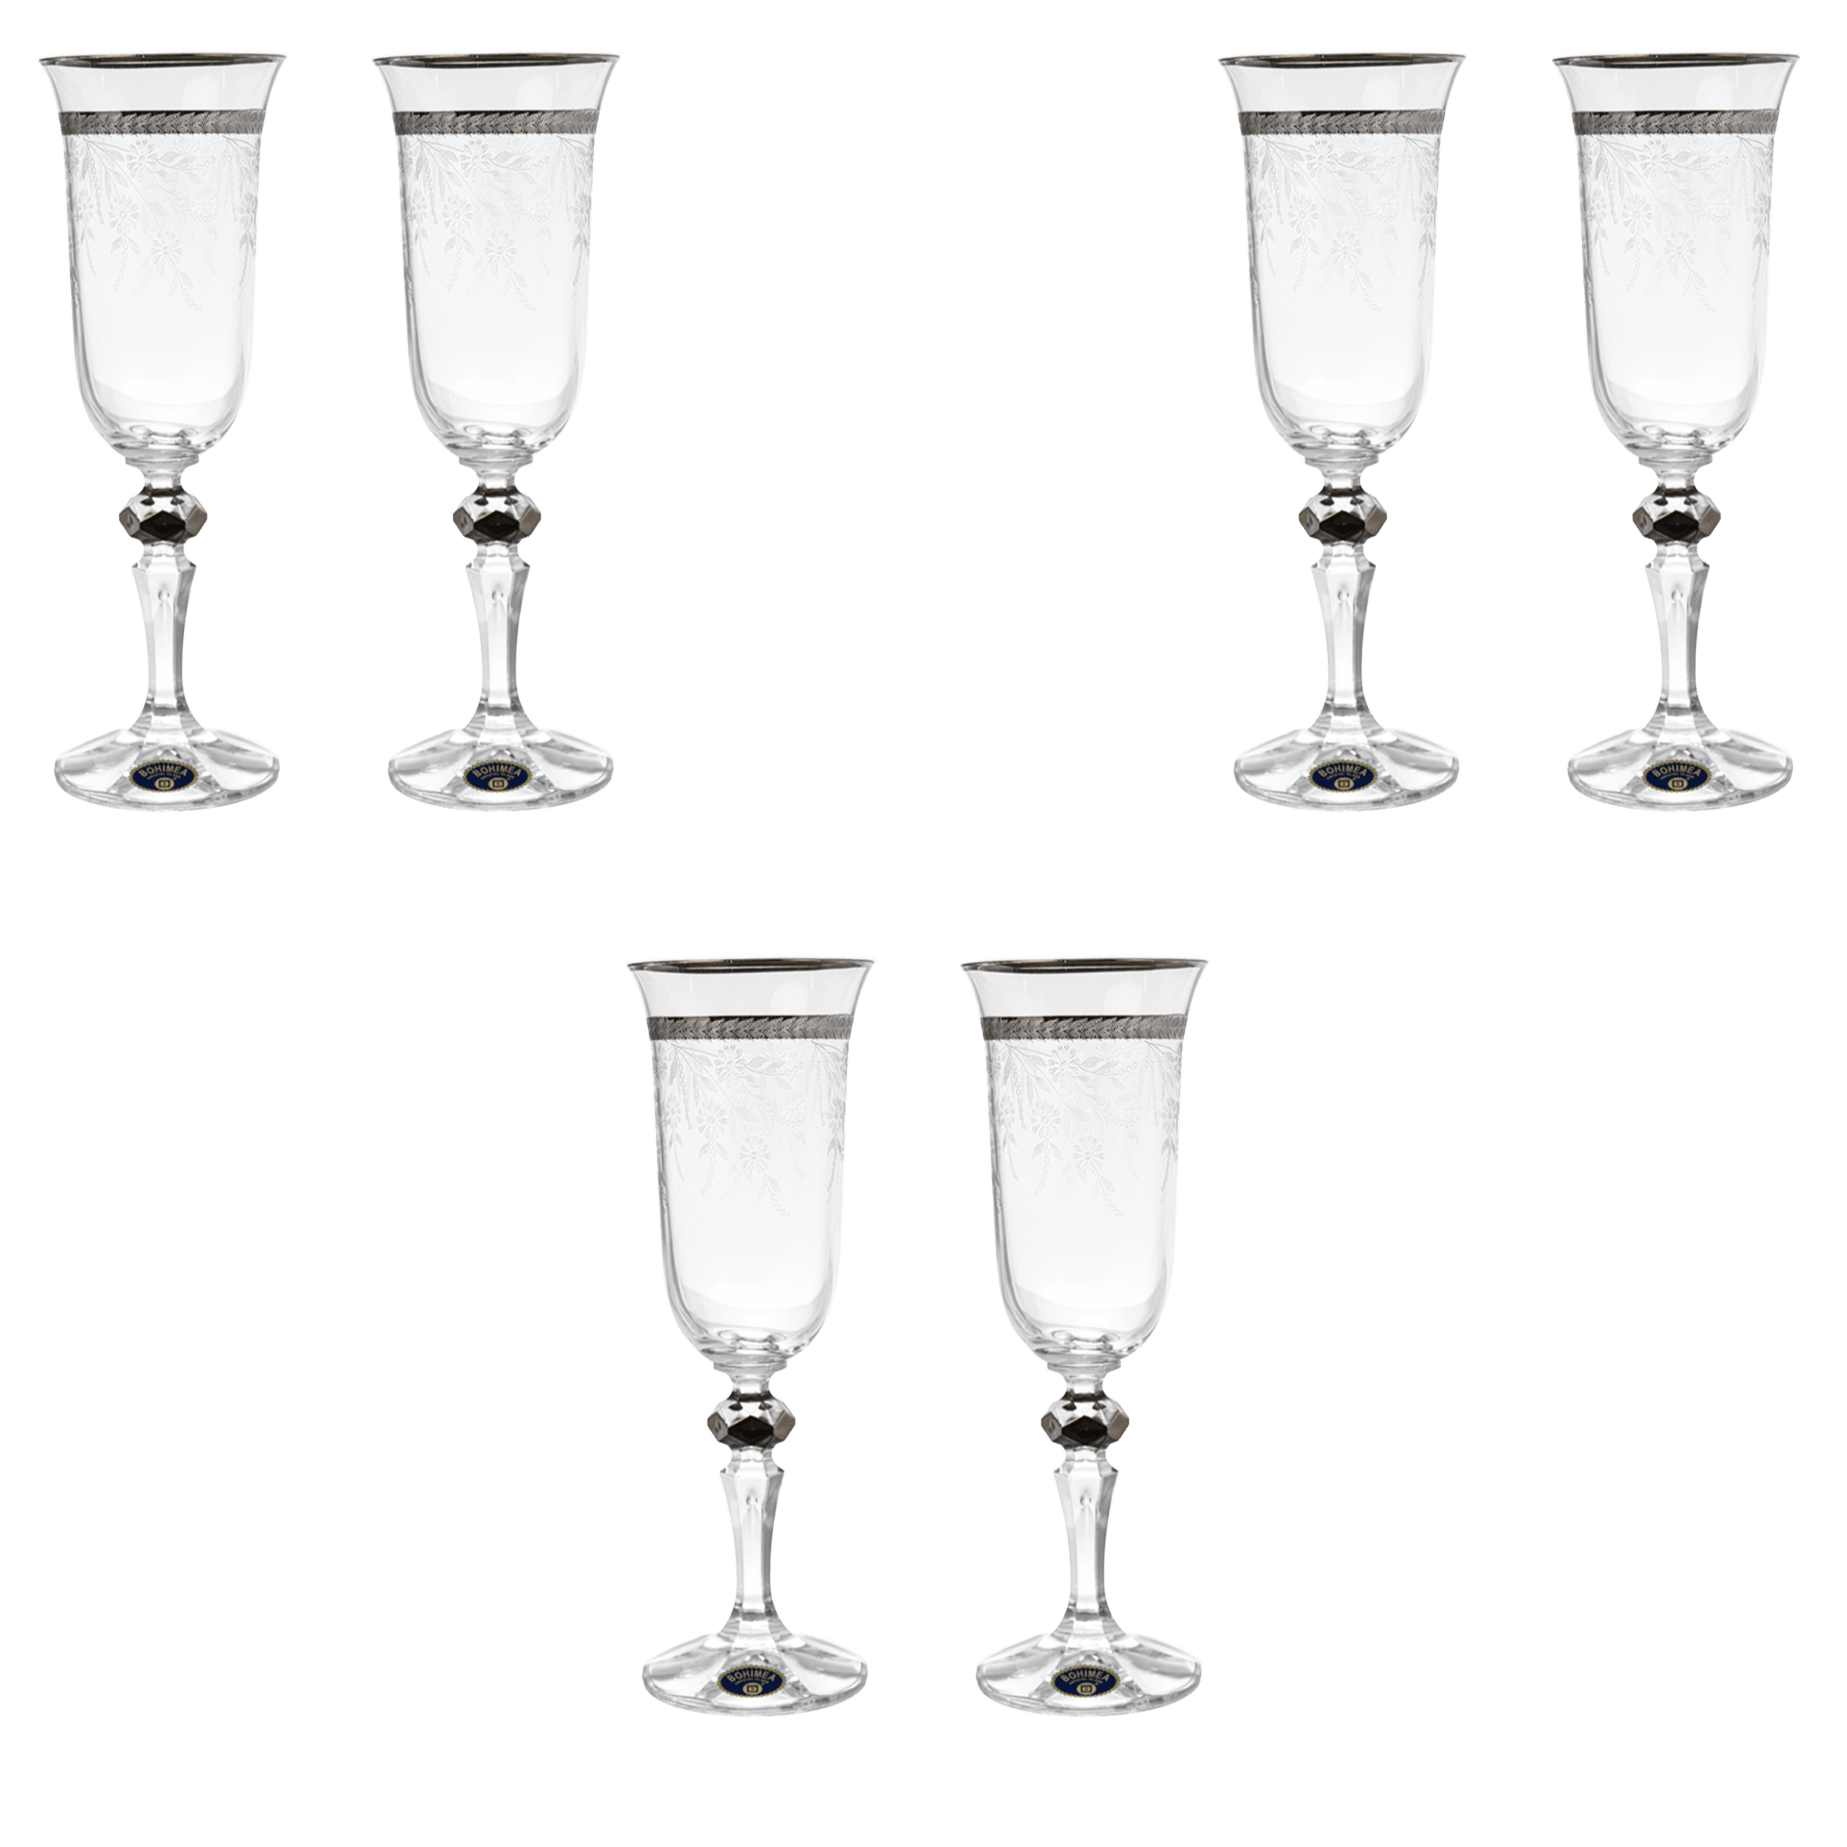 Bohemia Crystal - Flute Glass Set 6 Pieces - Silver - 150ml - 2700010696